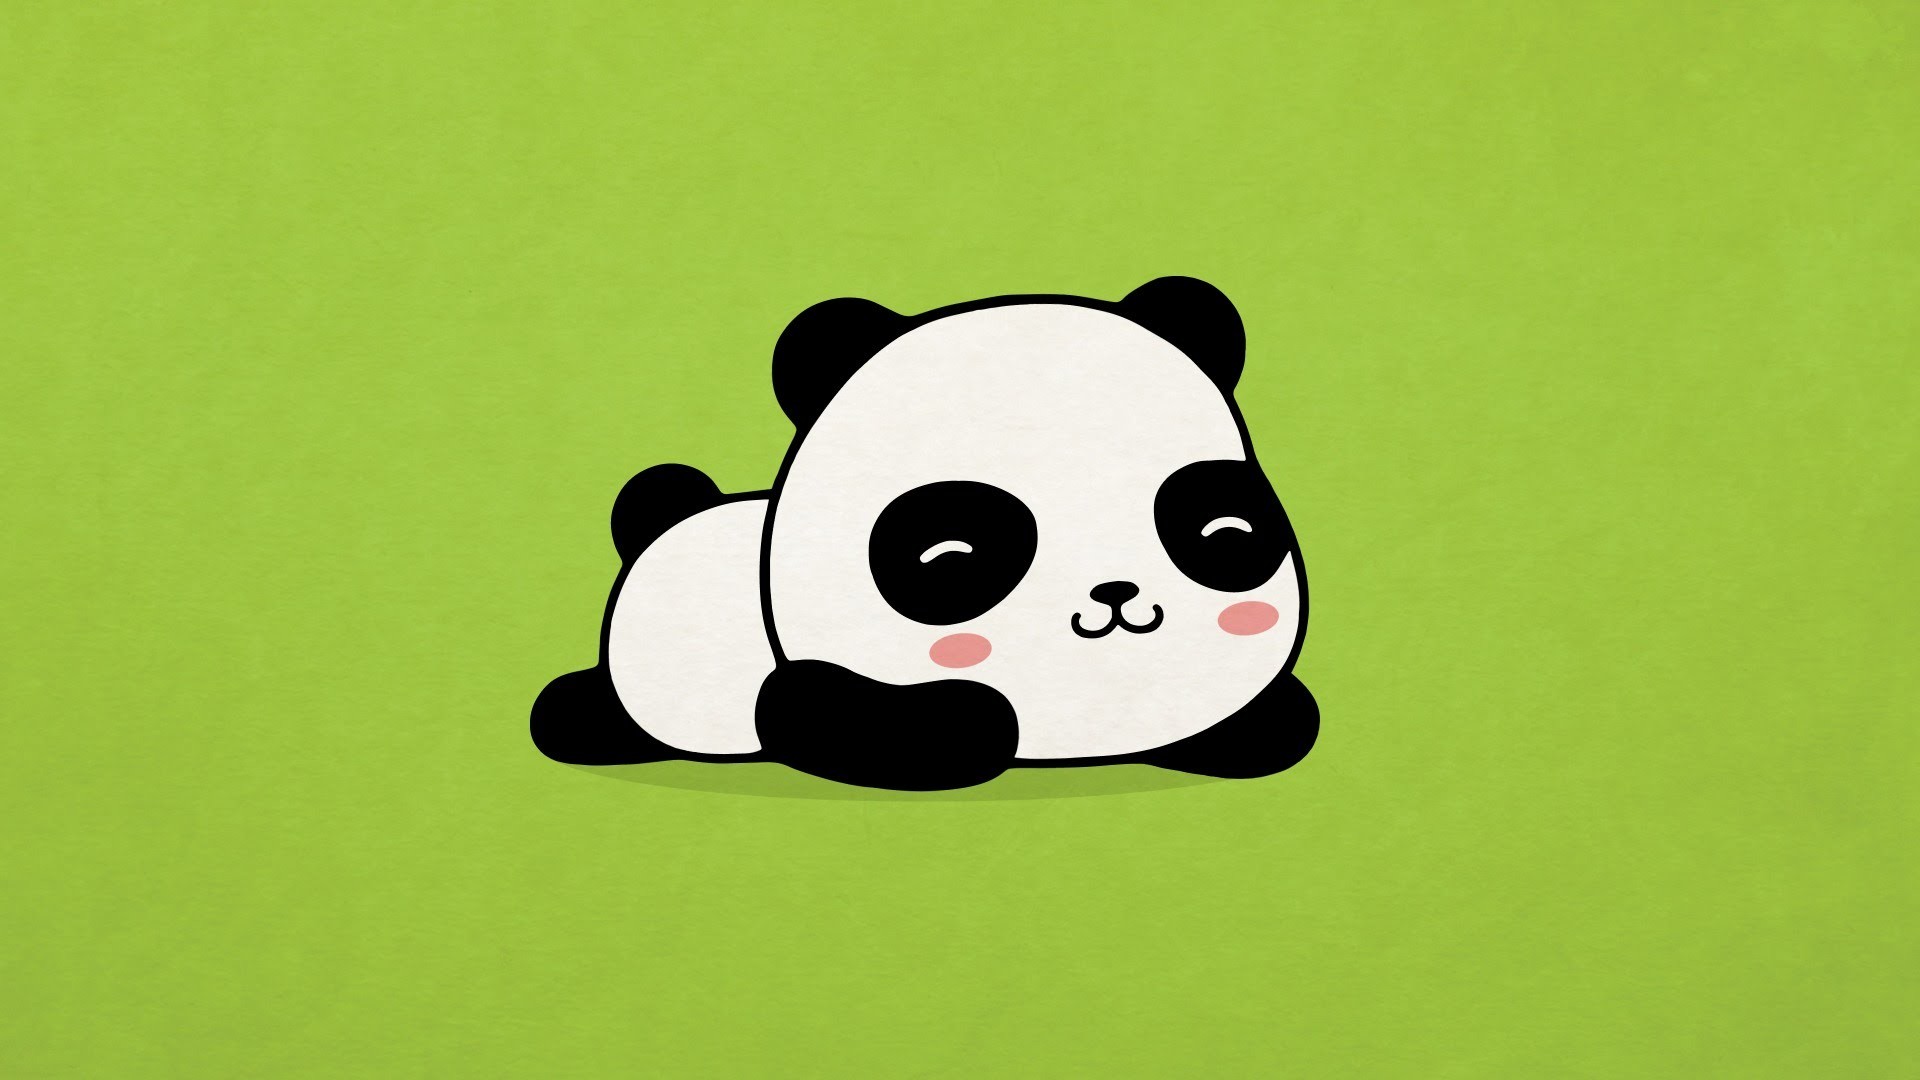 1920x1080  How To Draw] A Cute Sleepy Panda